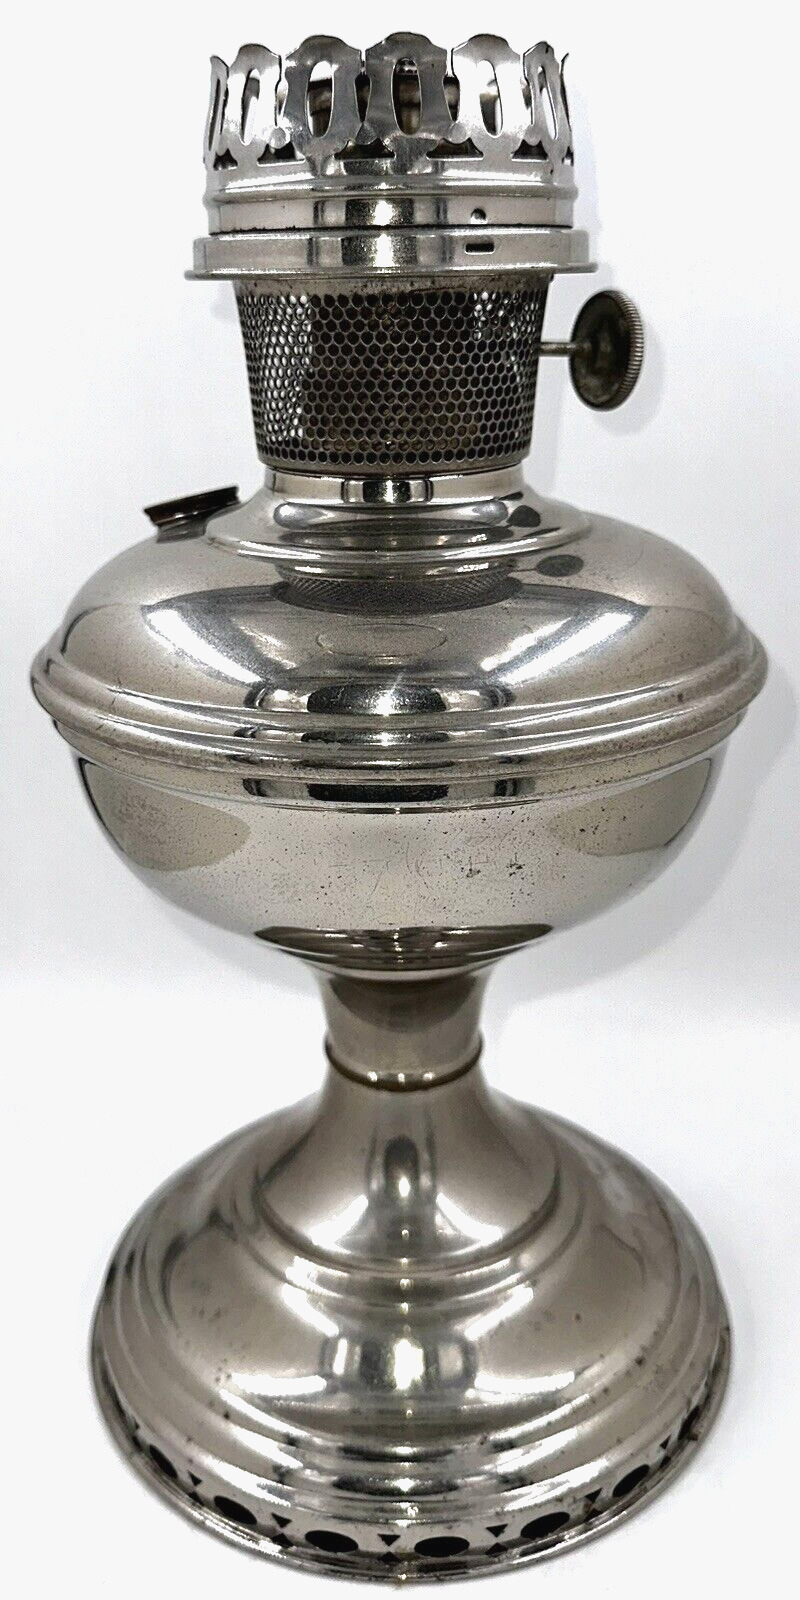 Antique ALADDIN 11 Kerosene Center Draft Lamp w/ Flame Spreader, Burner - Nickel